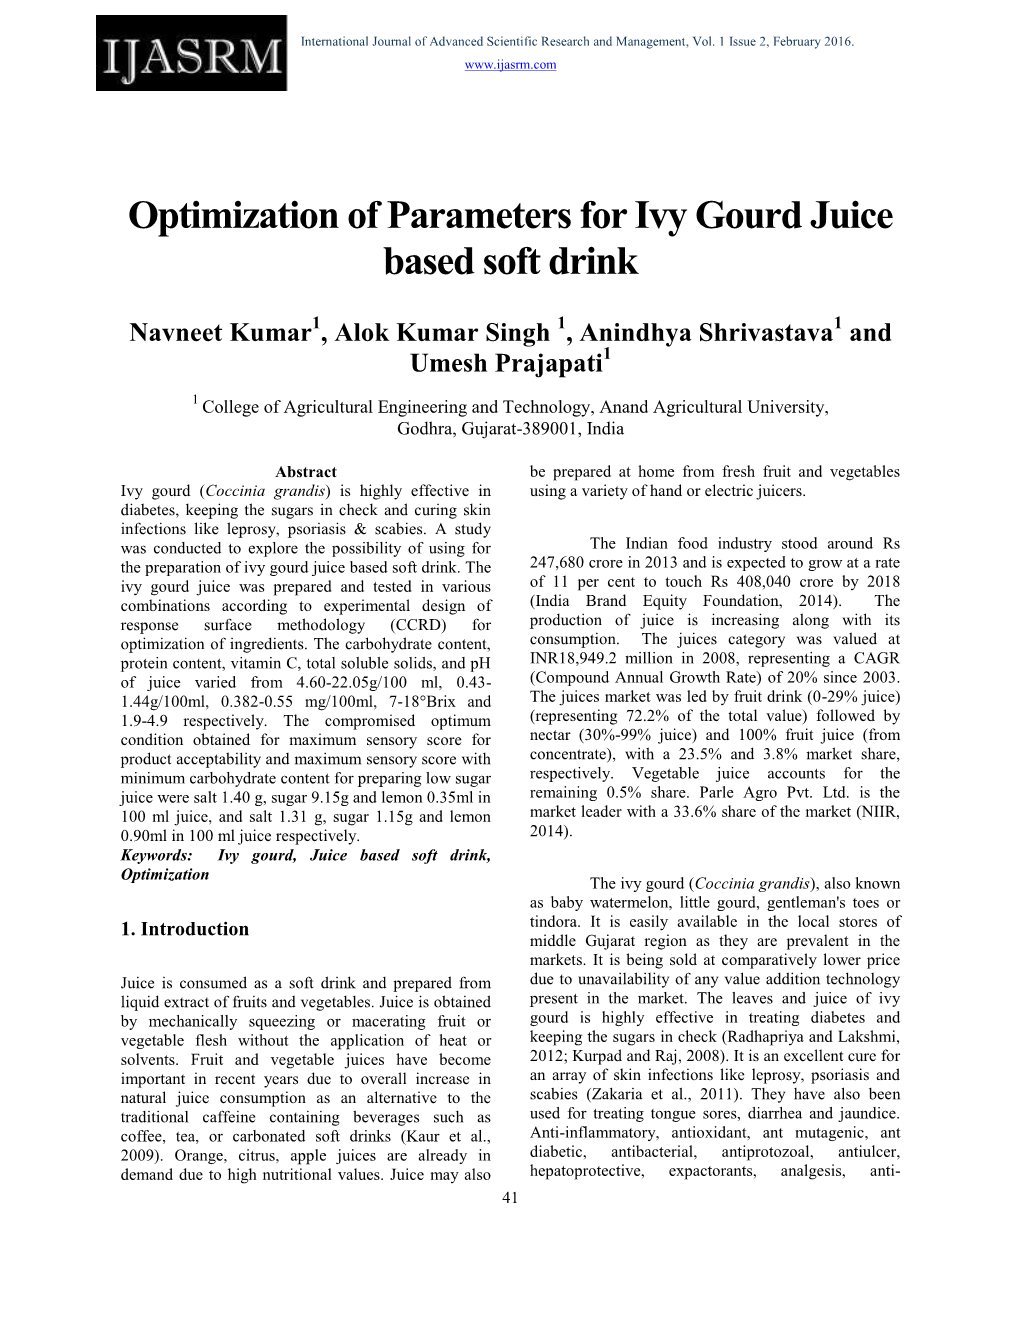 Optimization of Parameters for Ivy Gourd Juice Based Soft Drink